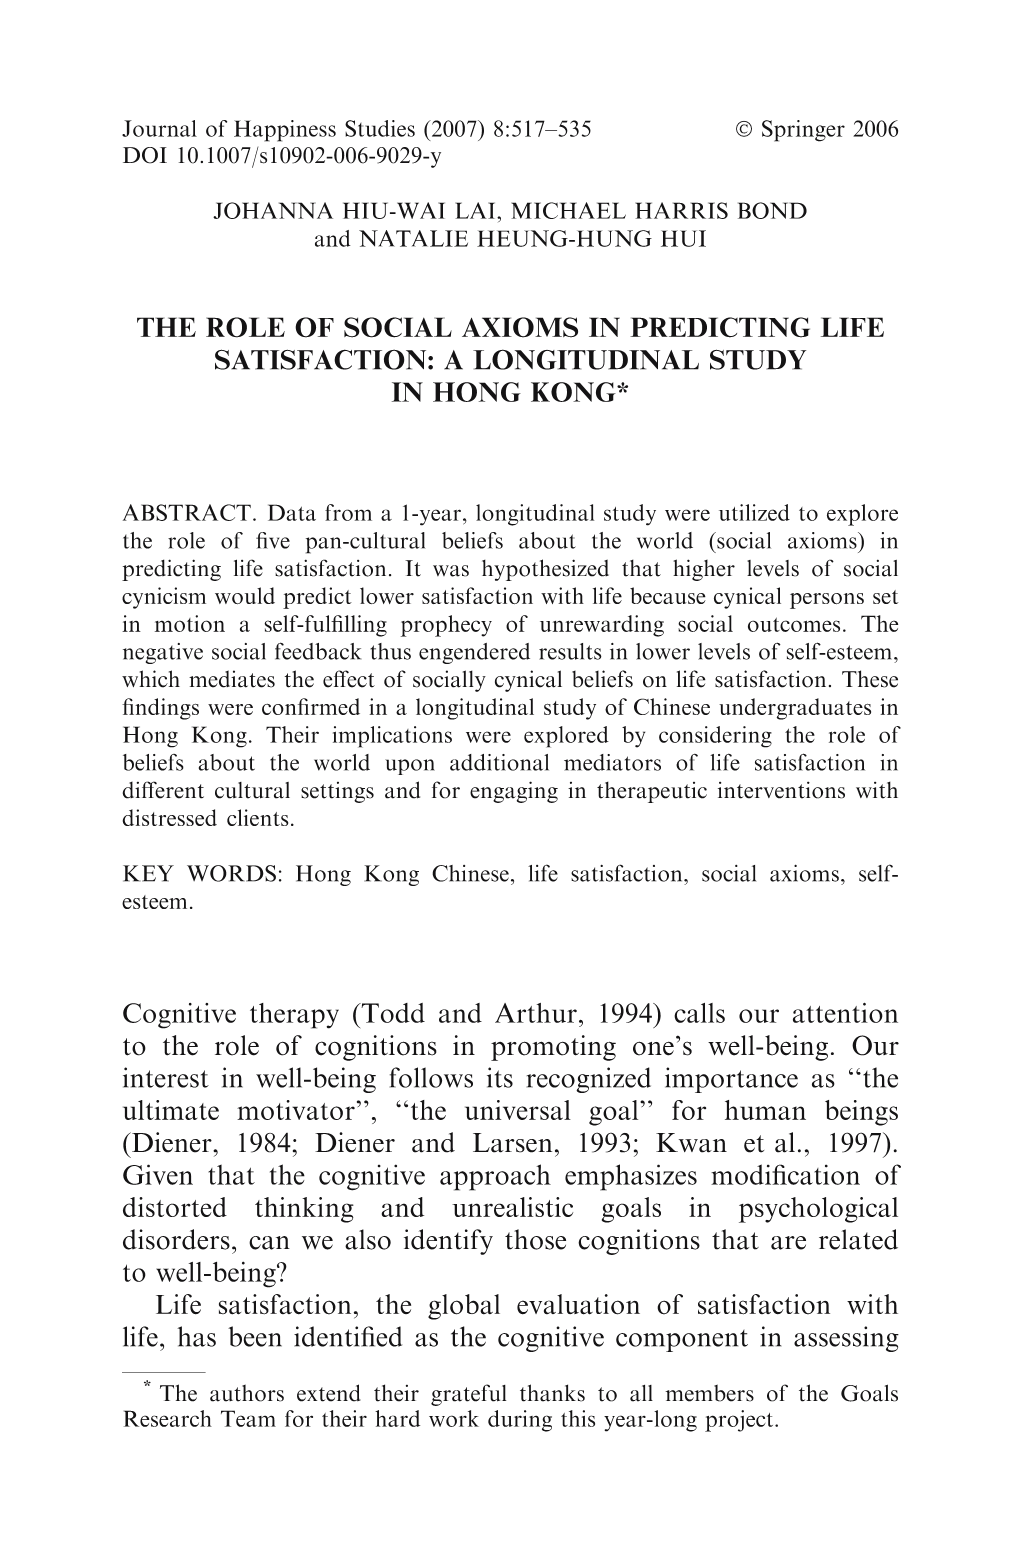 The Role of Social Axioms in Predicting Life Satisfaction: a Longitudinal Study in Hong Kong*